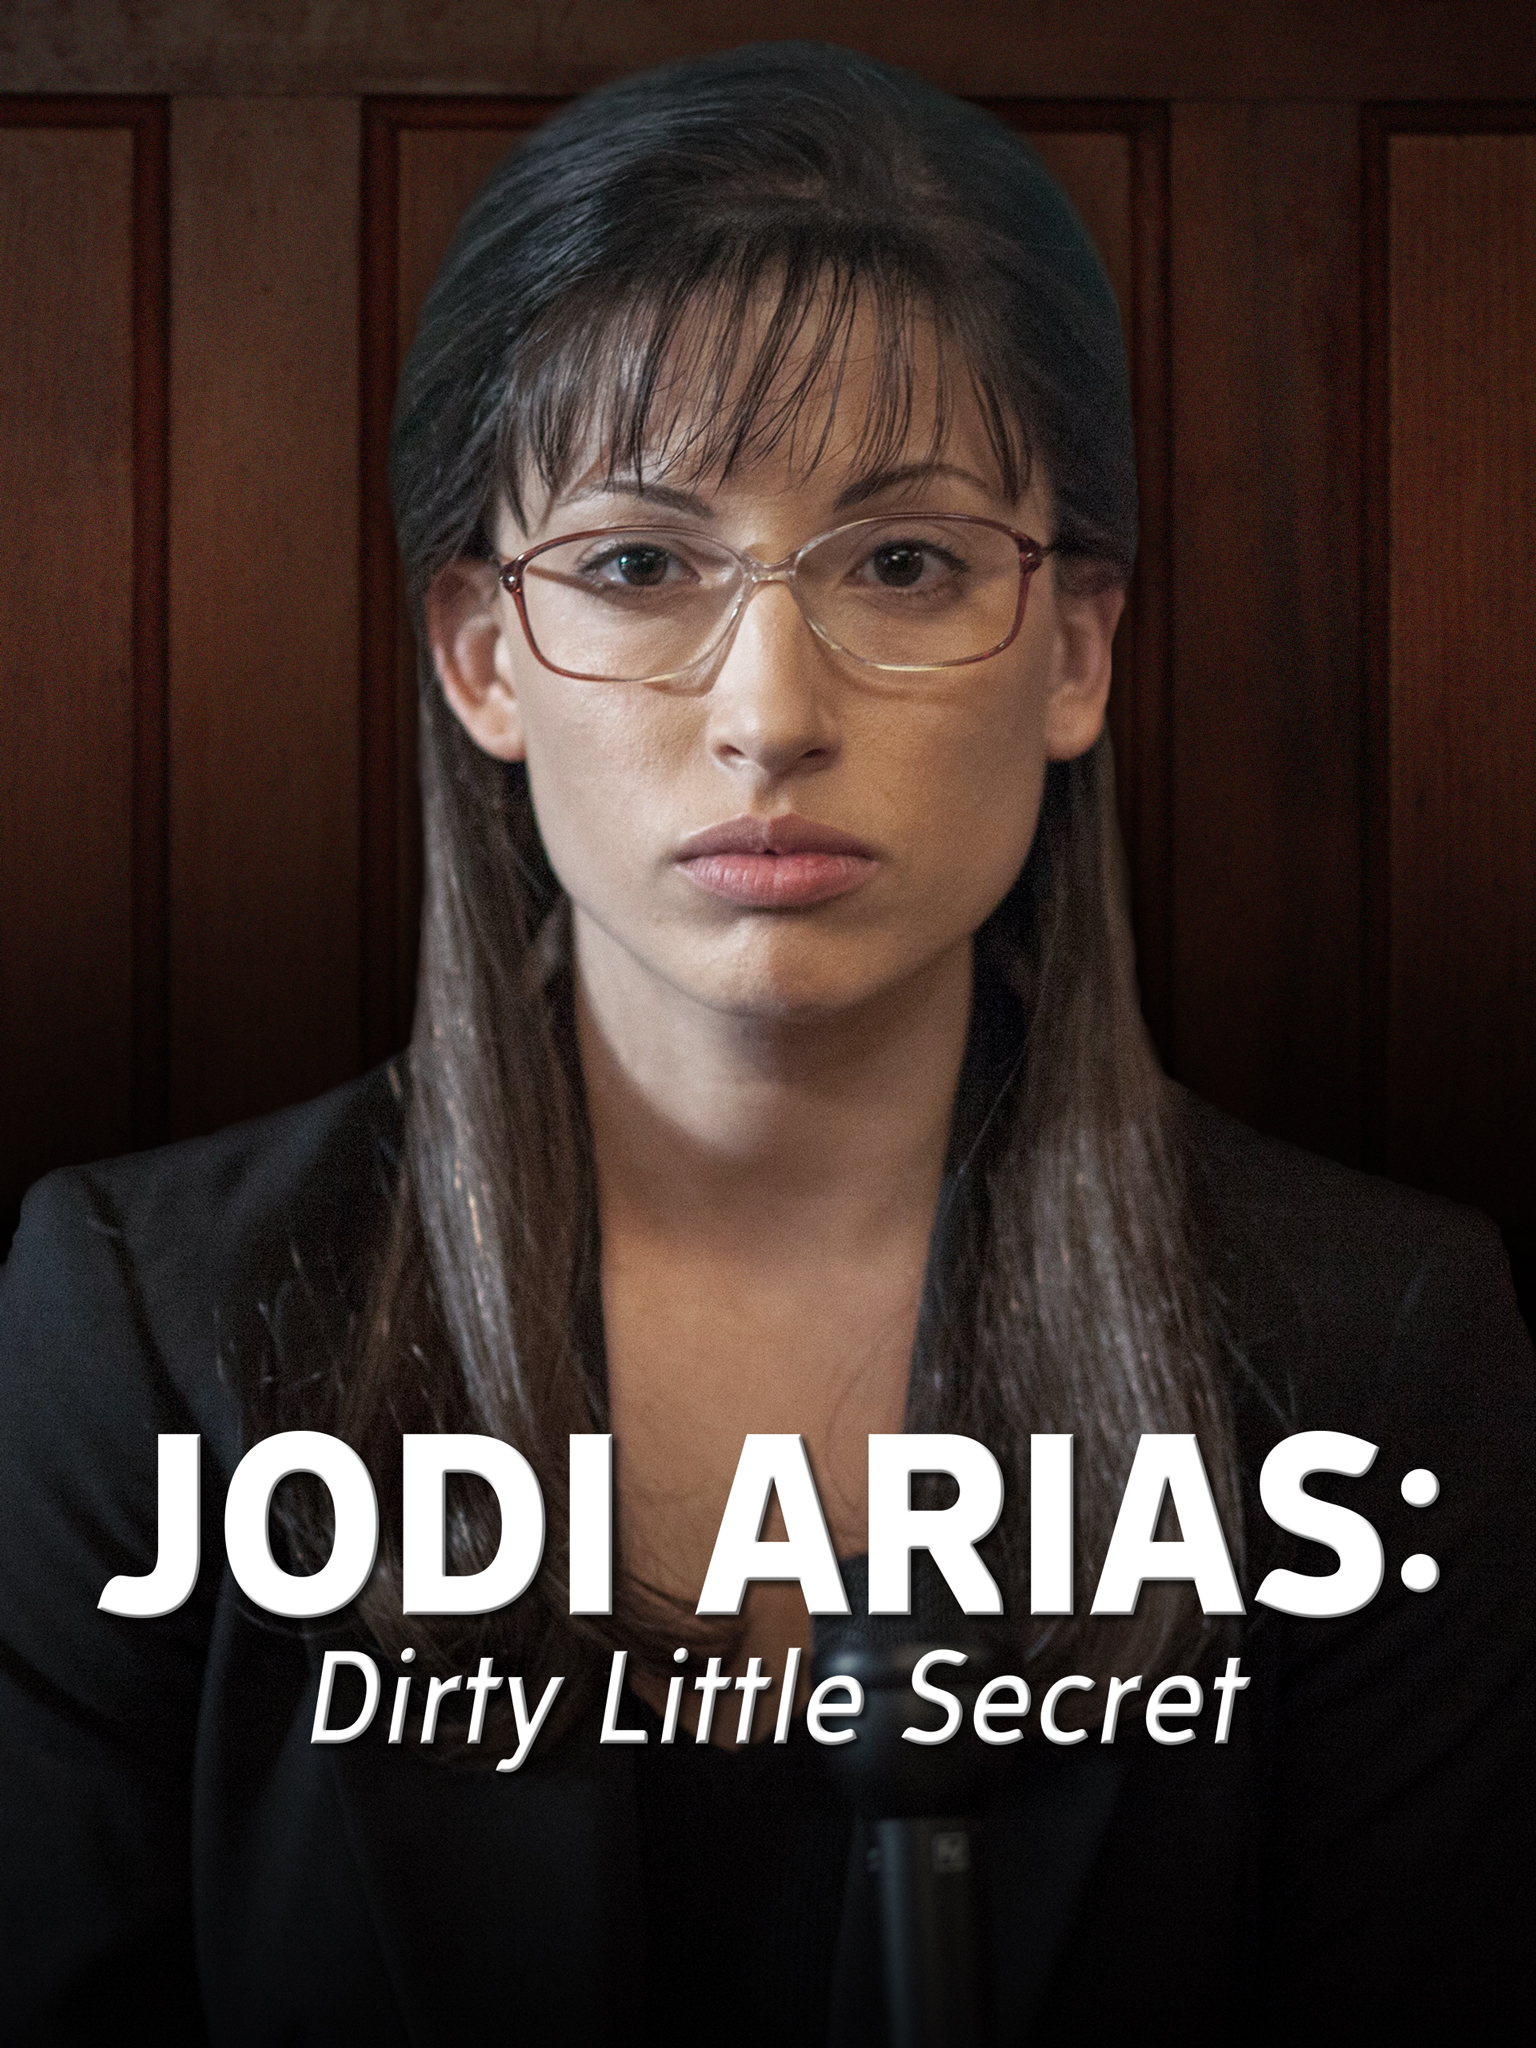 Jodi arias dirty little secret full movie